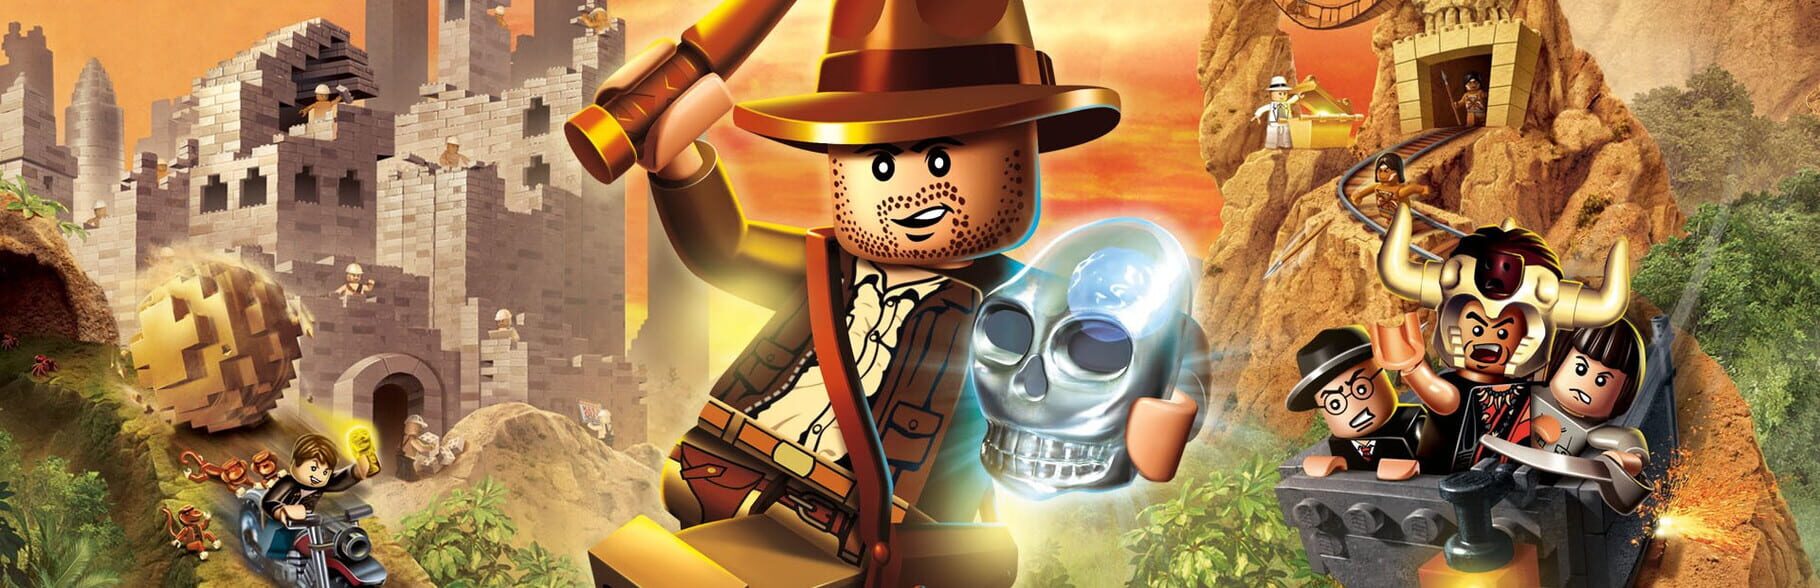 Arte - LEGO Indiana Jones 2: The Adventure Continues